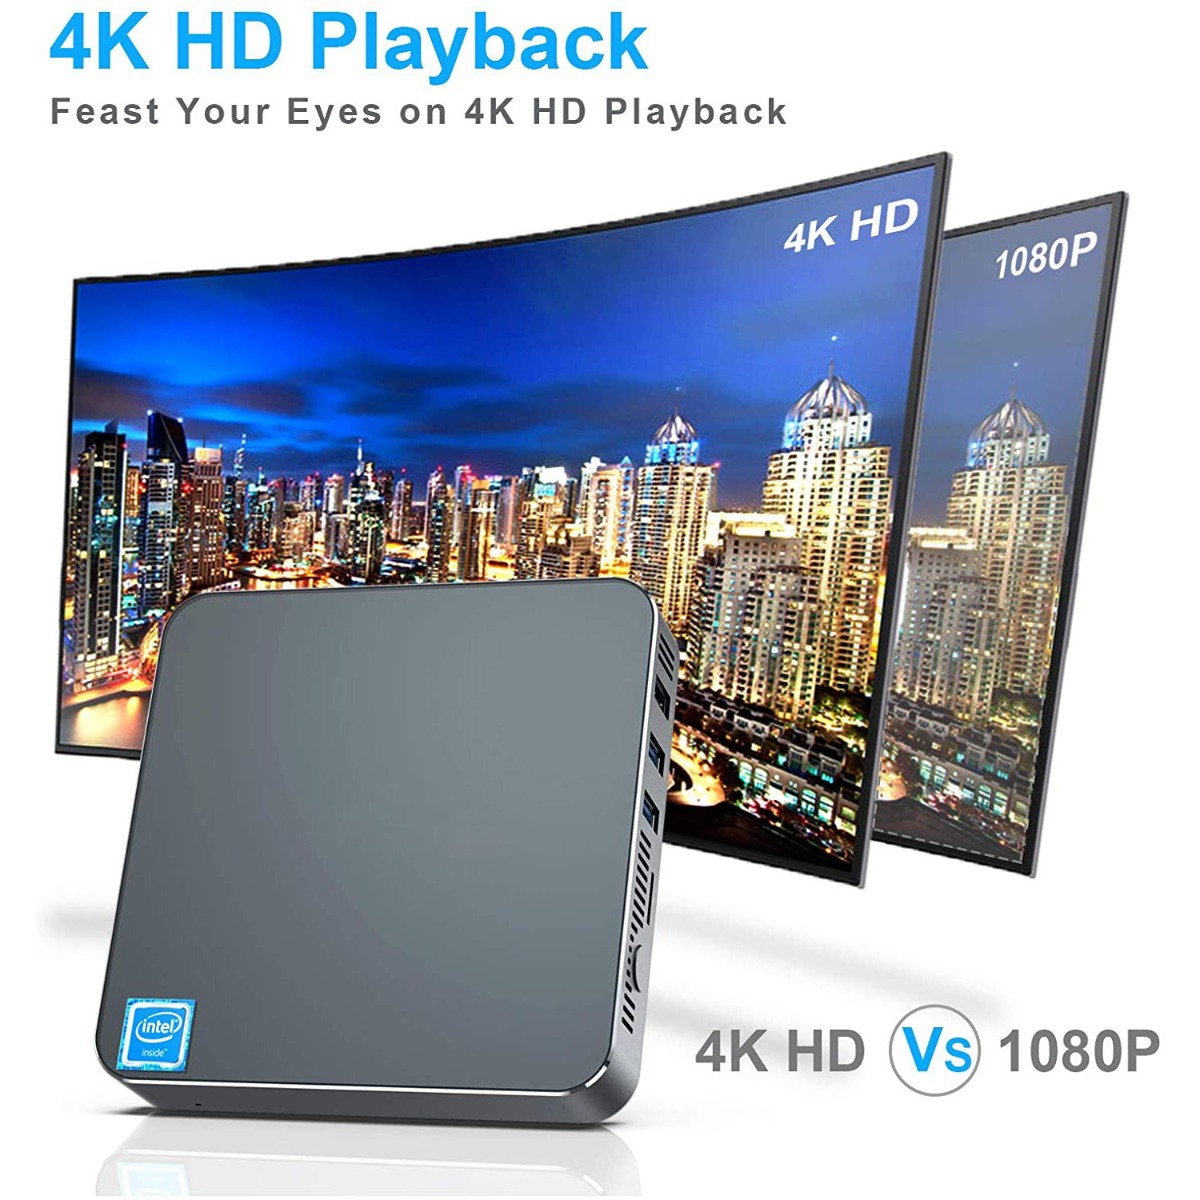 Ultra Mini PC GK7 | 4K HD Playback Feast Your Eyes on 4K HD Playback 4K HD (Vs) 1080P